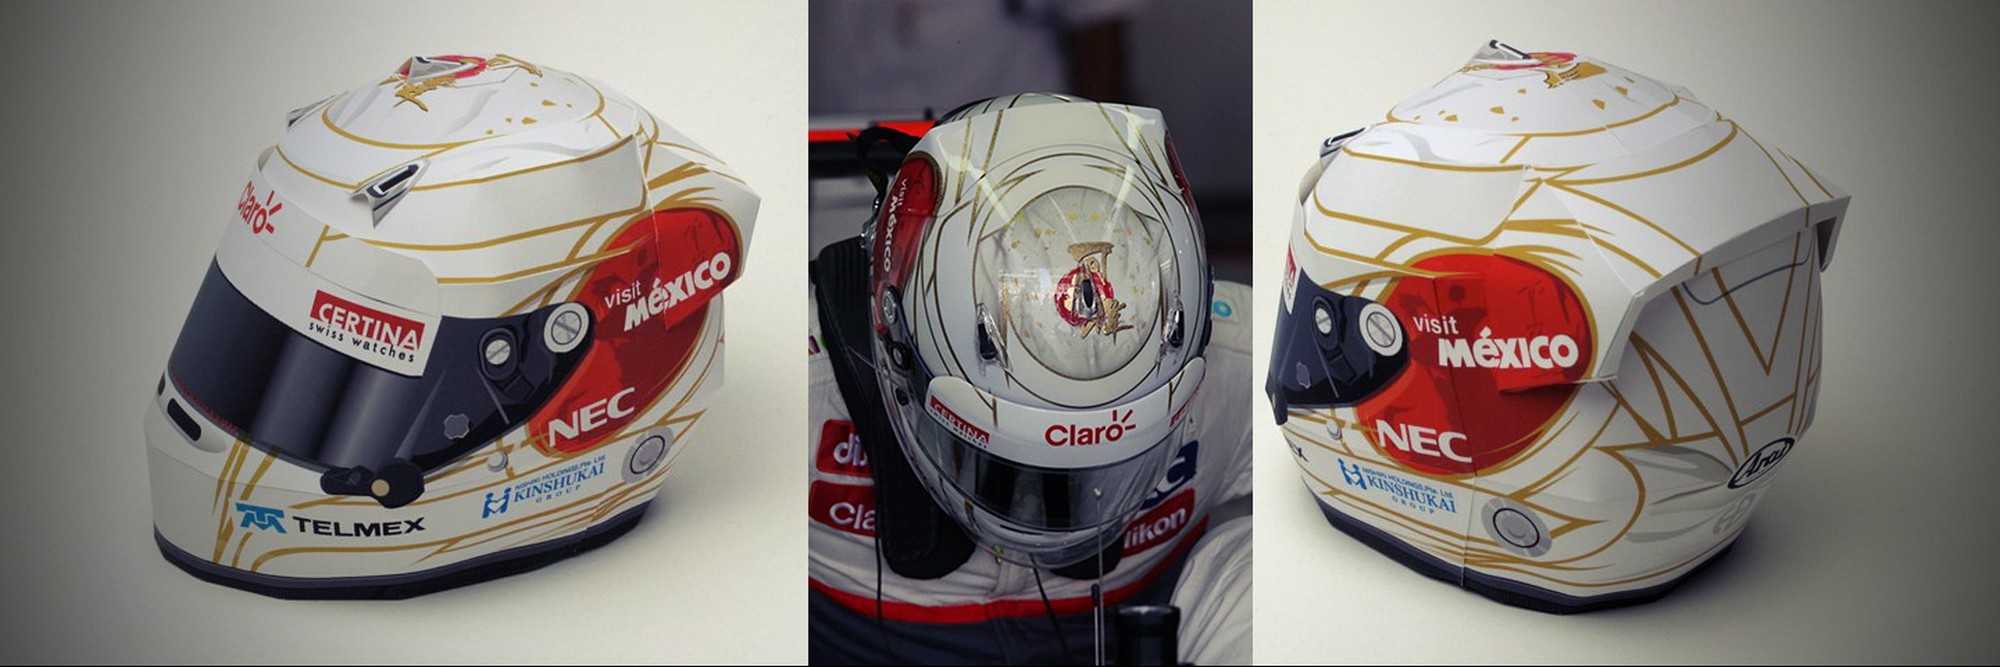 Шлем Камуи Кобаяши на Гран-При Японии 2012 года | 2012 Japanese Grand Prix helmet of Kamui Kobayashi